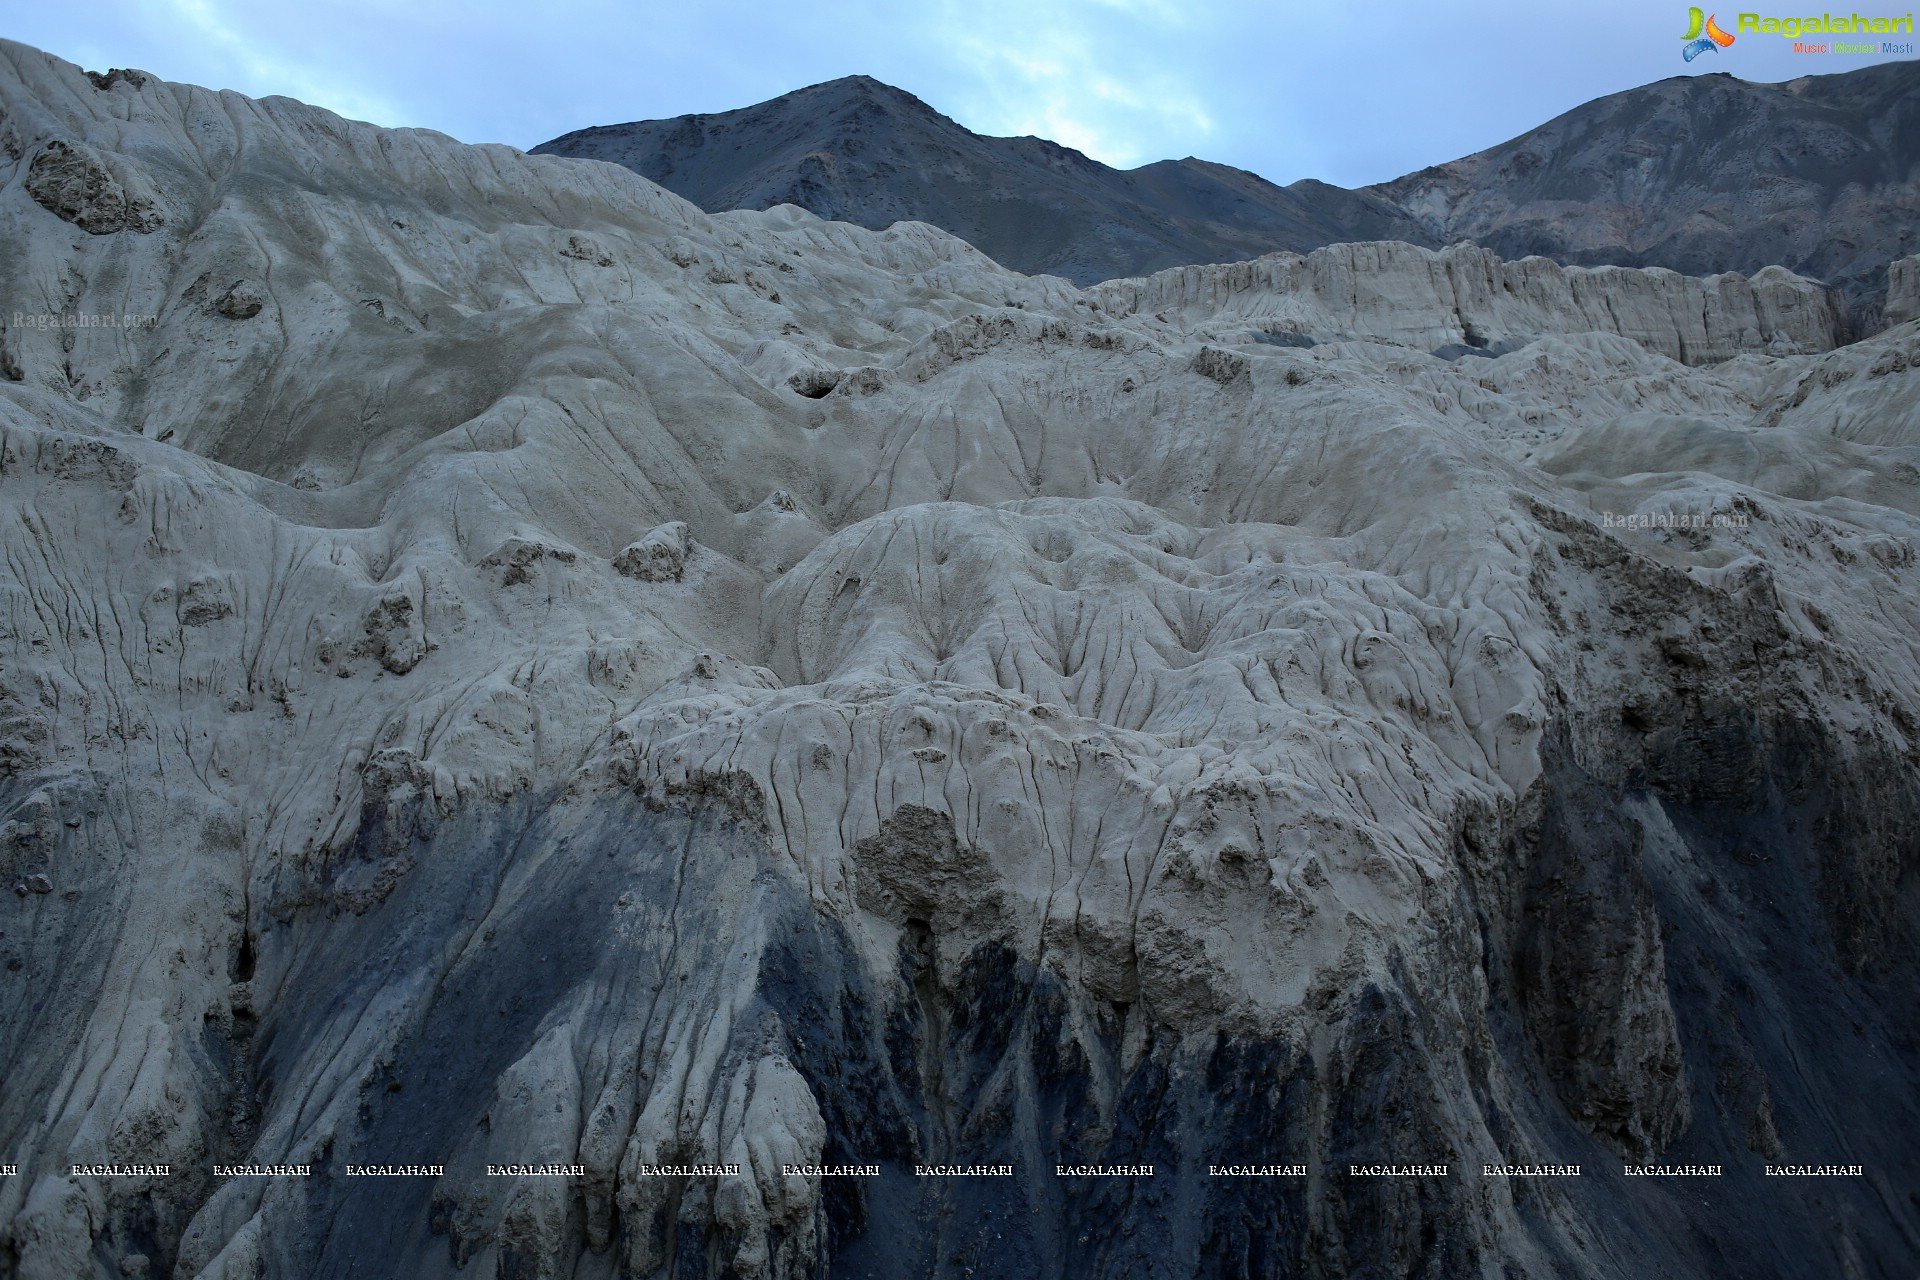 Moonland, Ladakh High Definition Photos